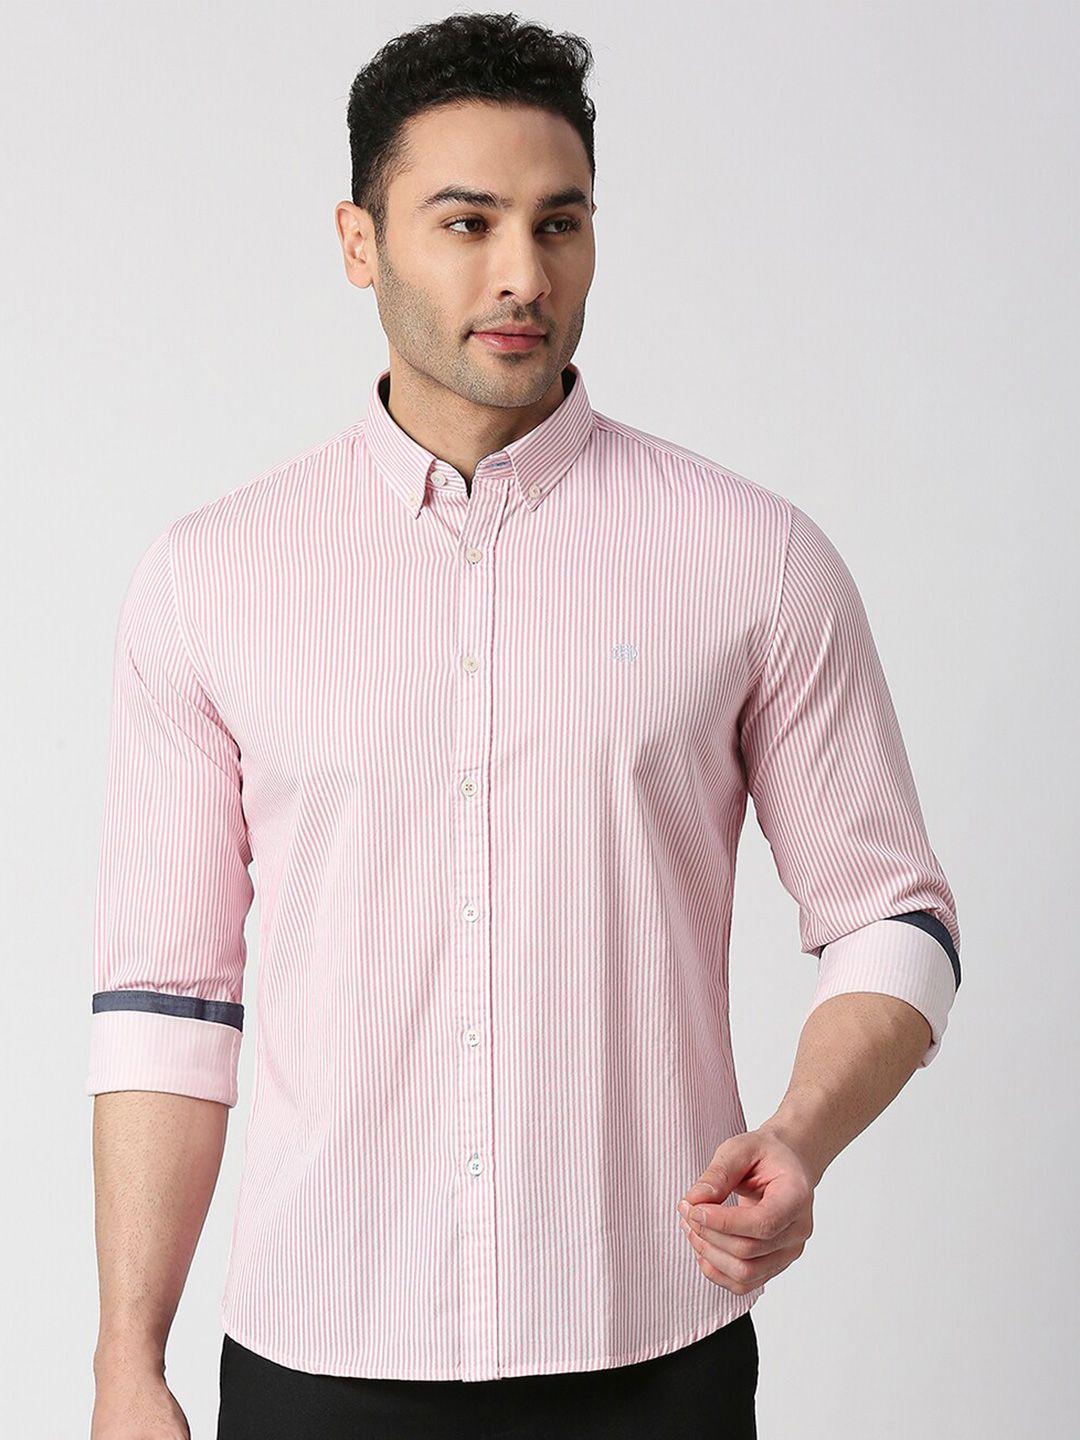 dragon-hill-slim-fit-printed-button-down-collar-cotton-casual-shirt